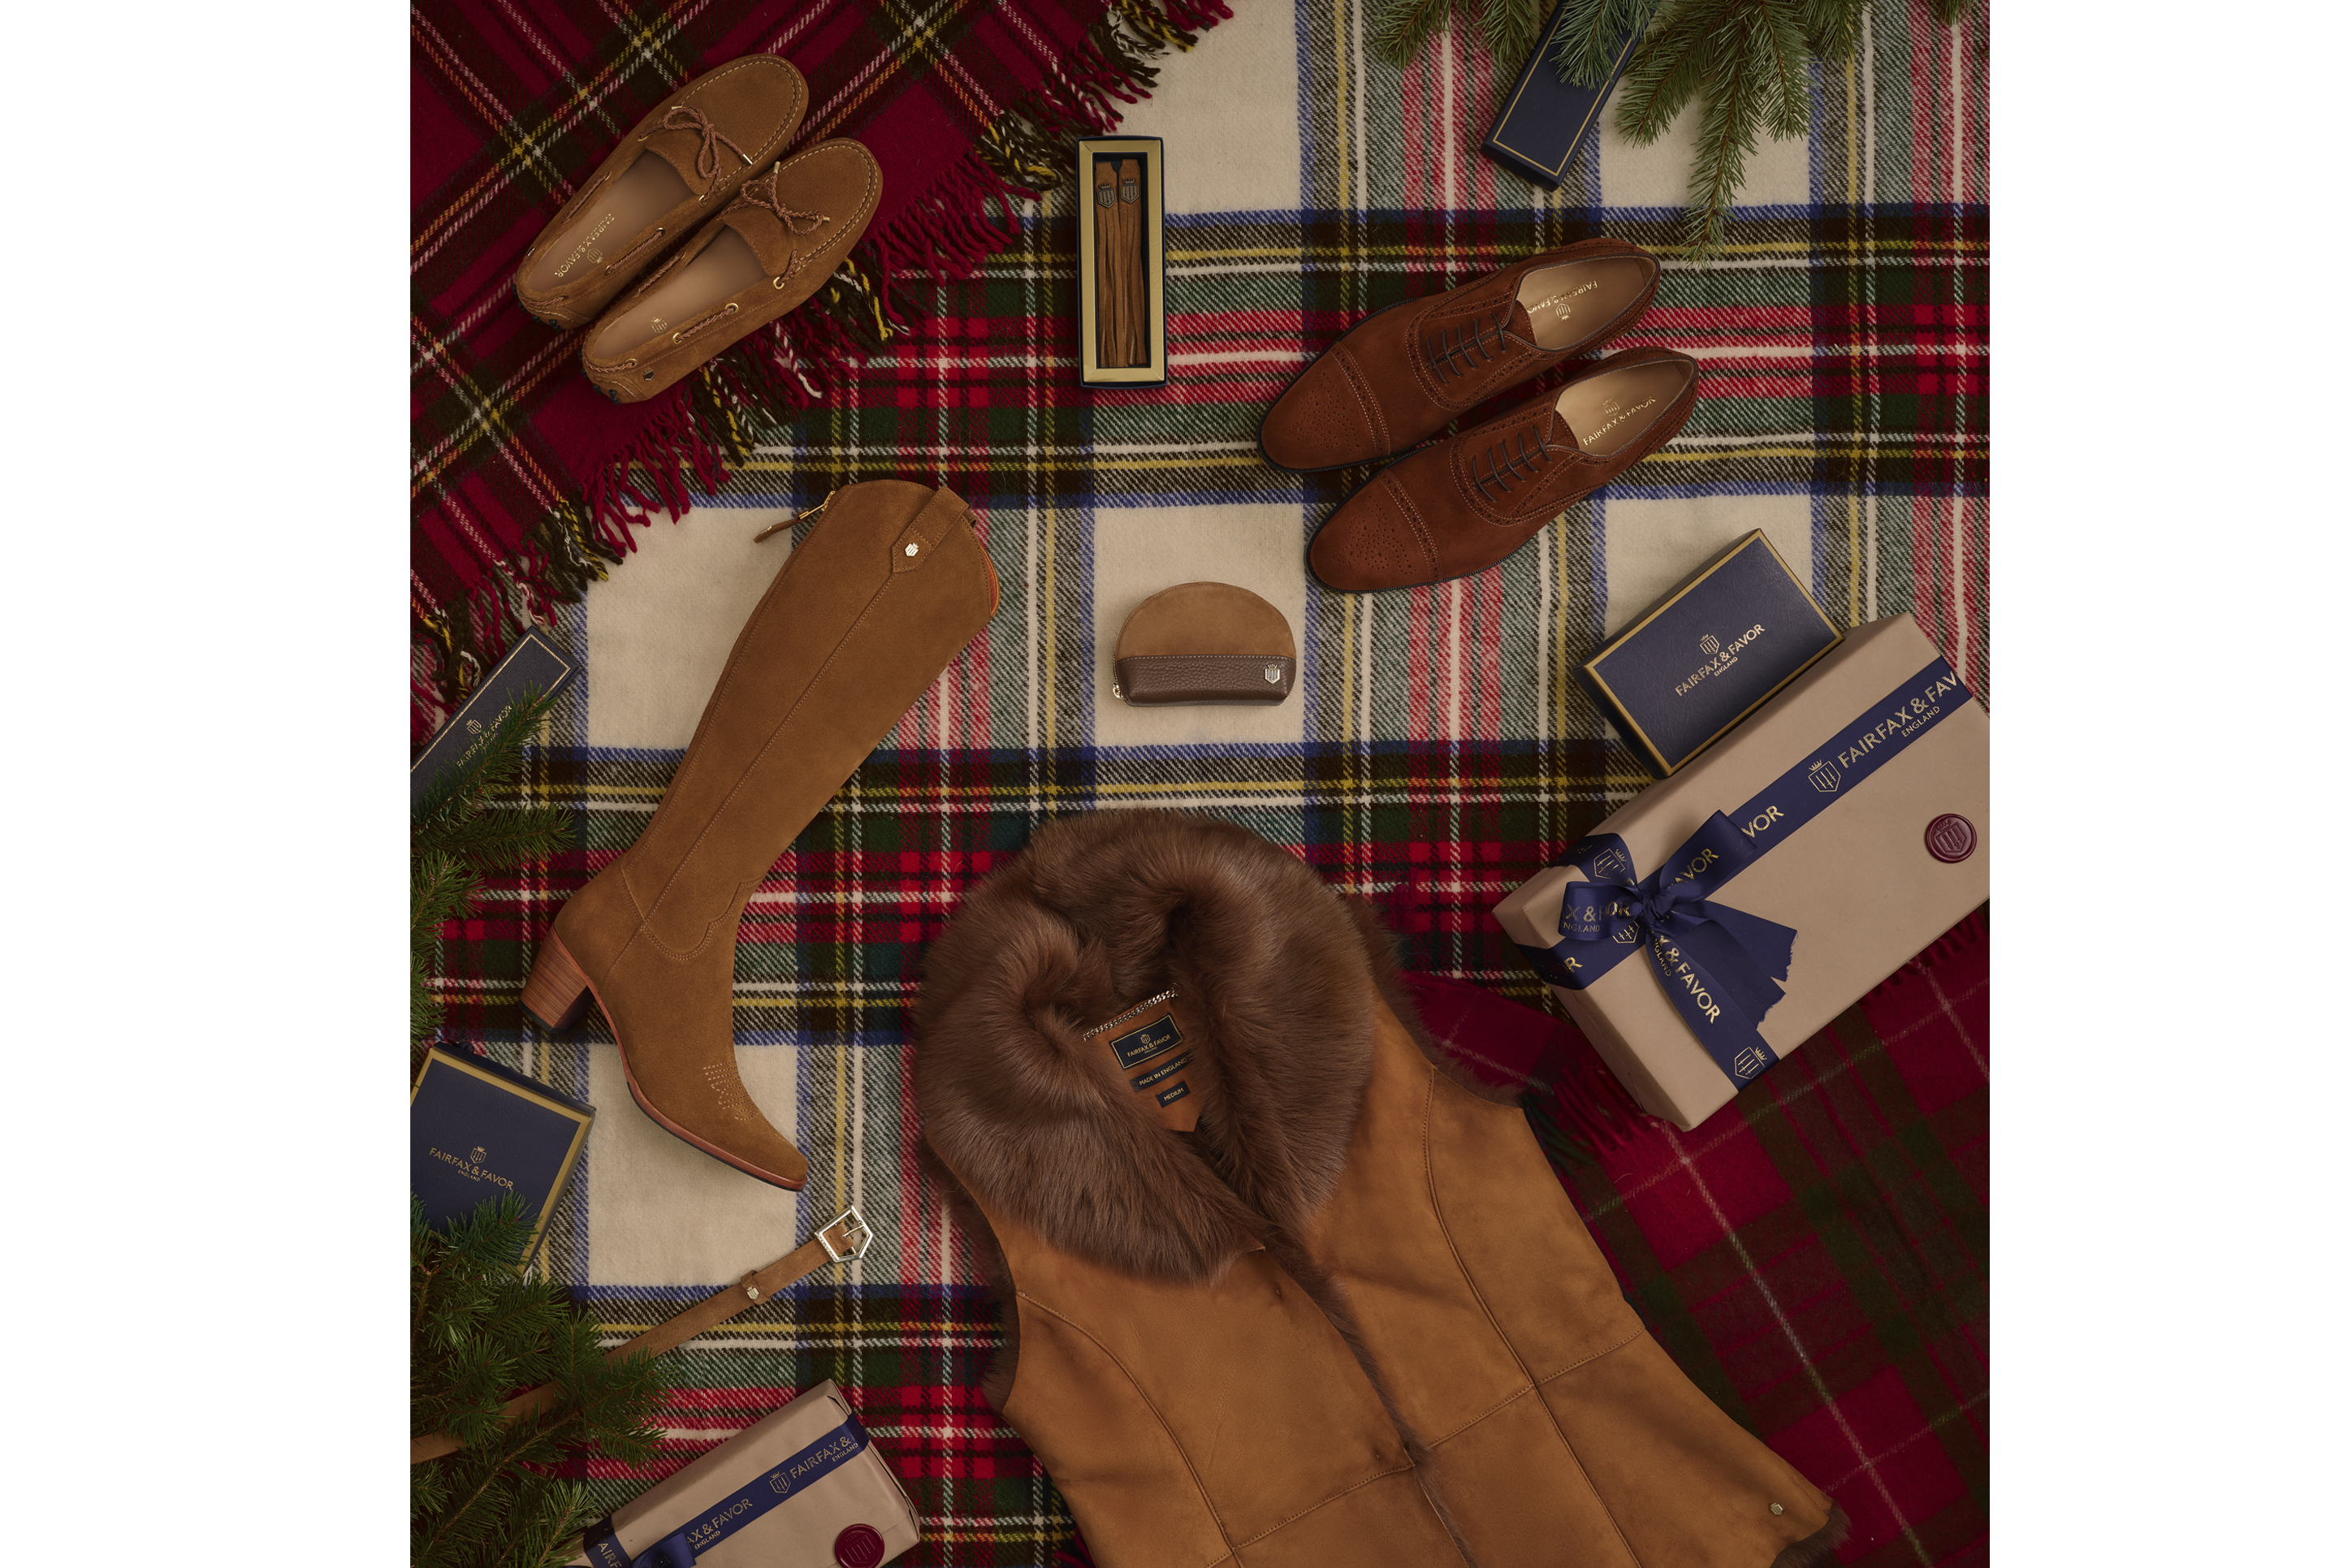 Flat lay photo shoot with shoes handbags and Christmas presents laying down on a tartan rug